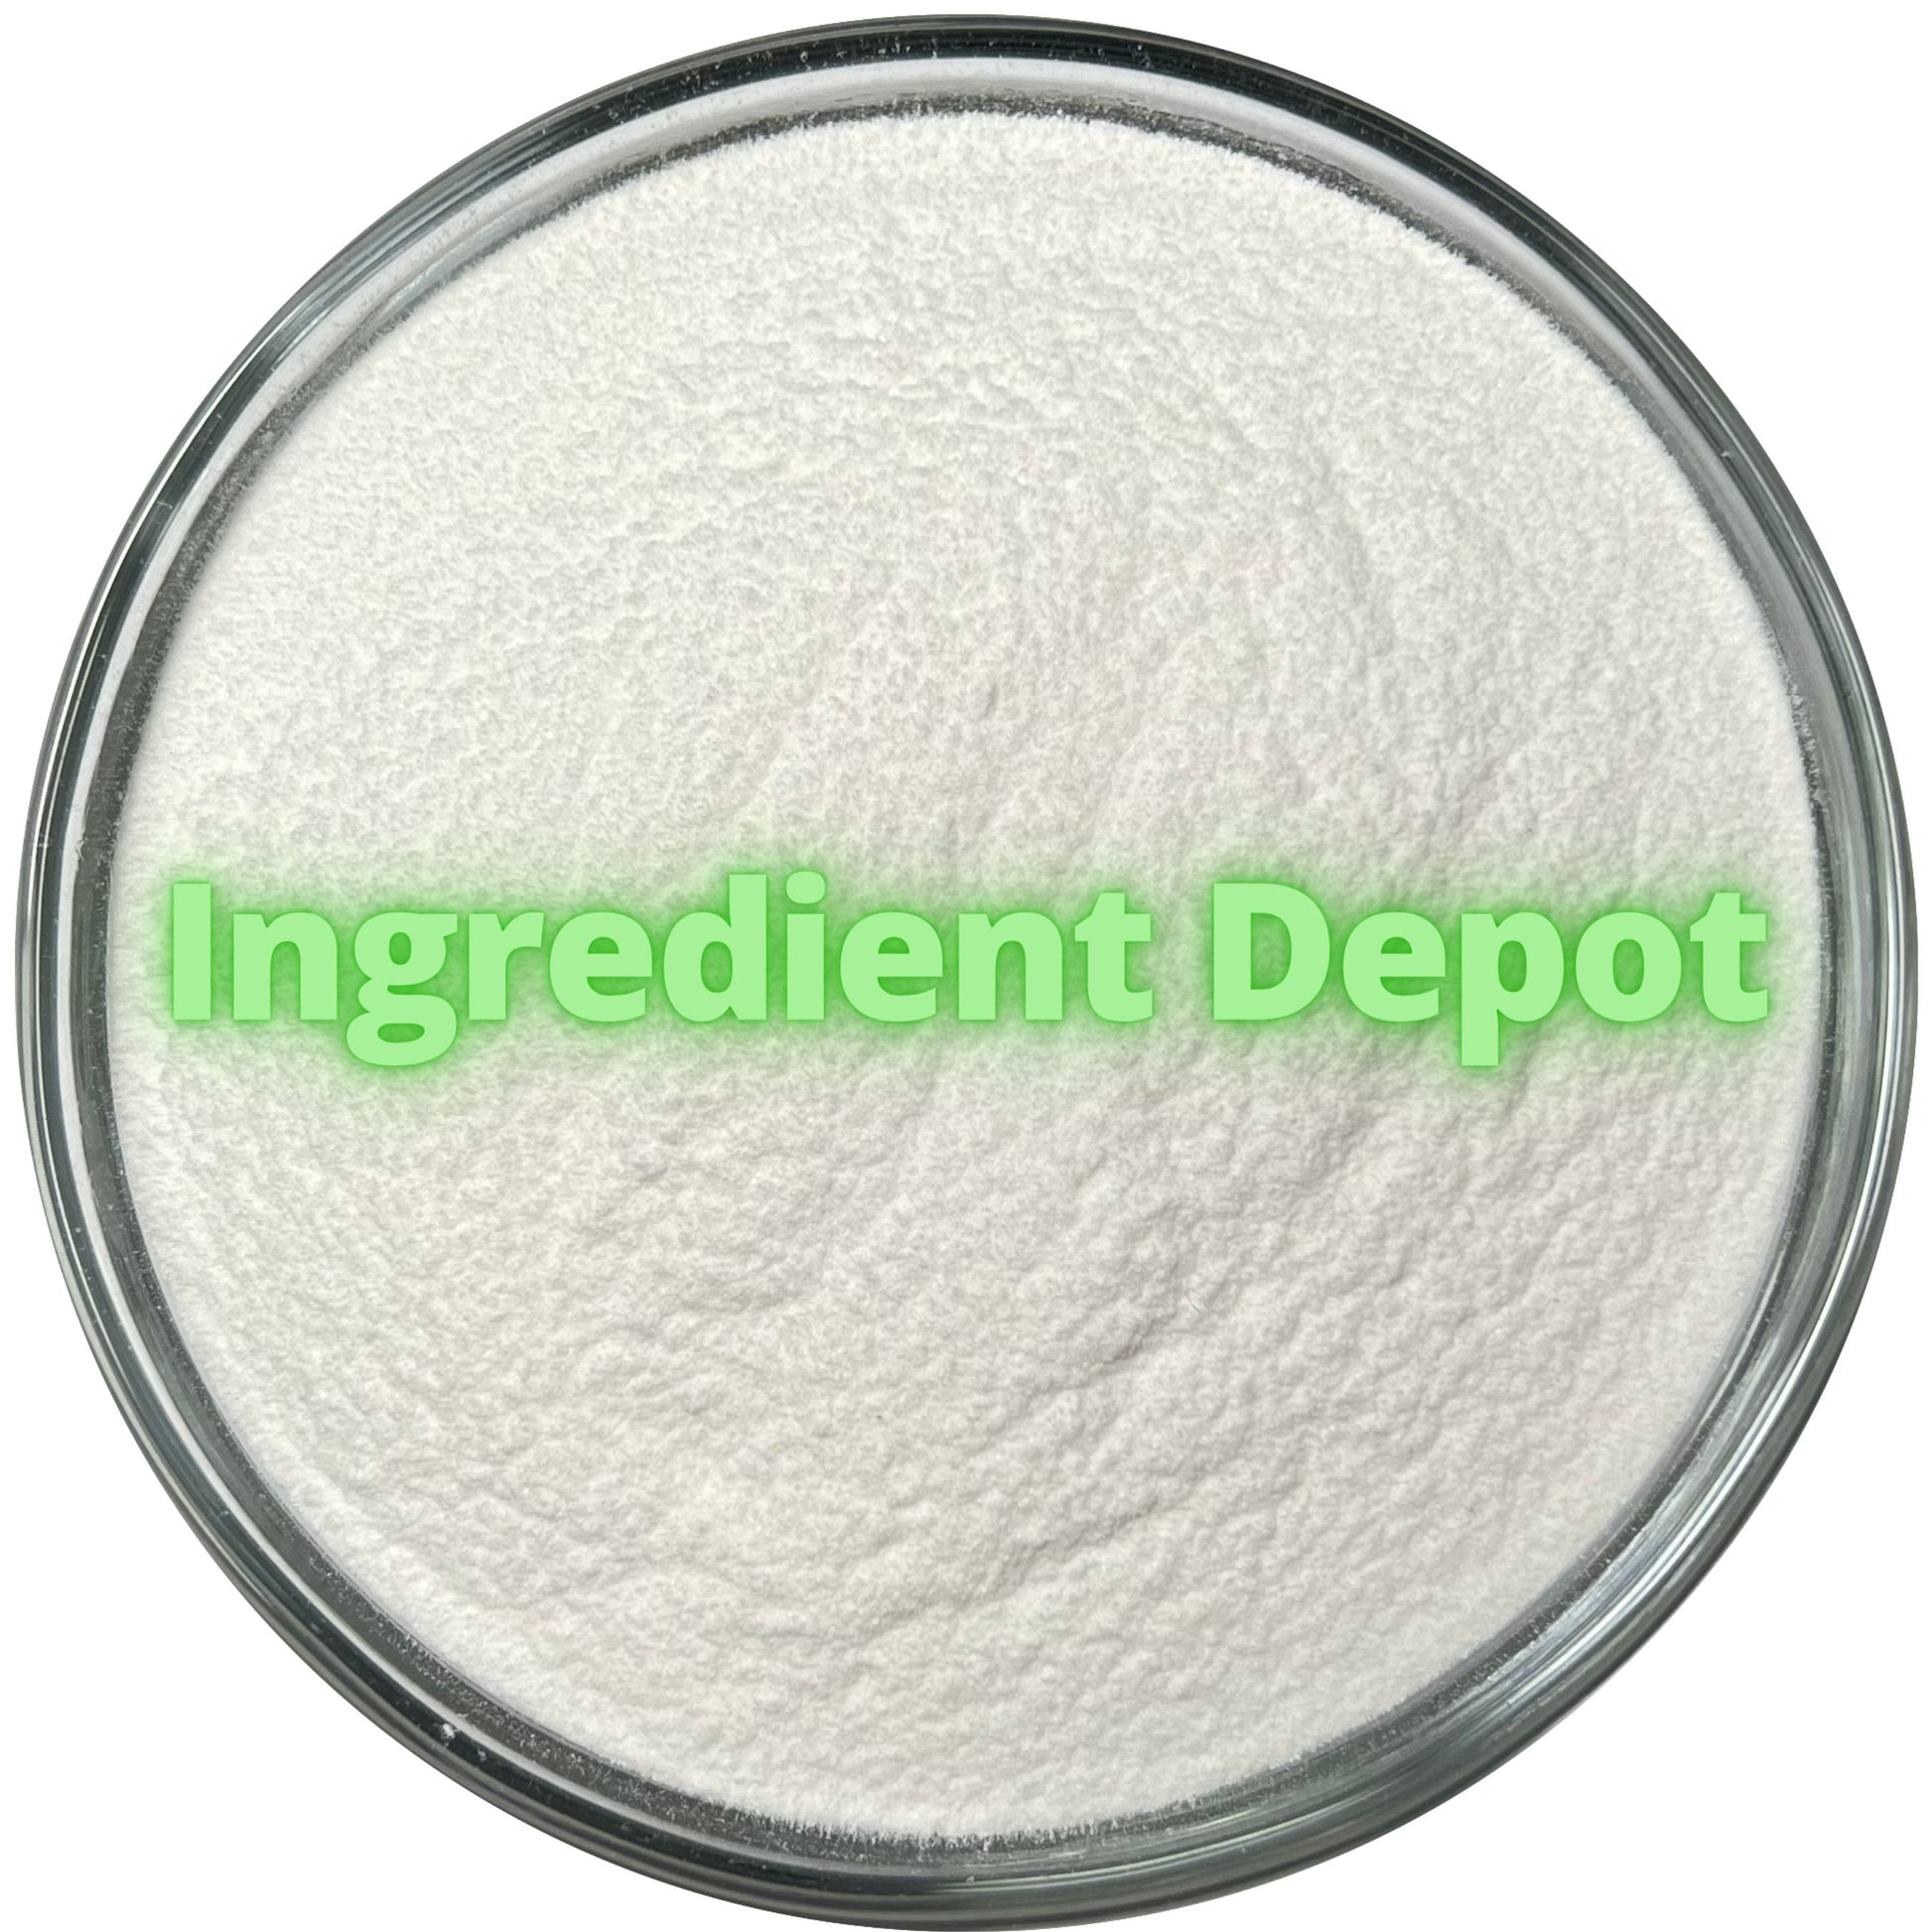 MCC 102 Microcrystalline Cellulose 10 kgs - IngredientDepot.com